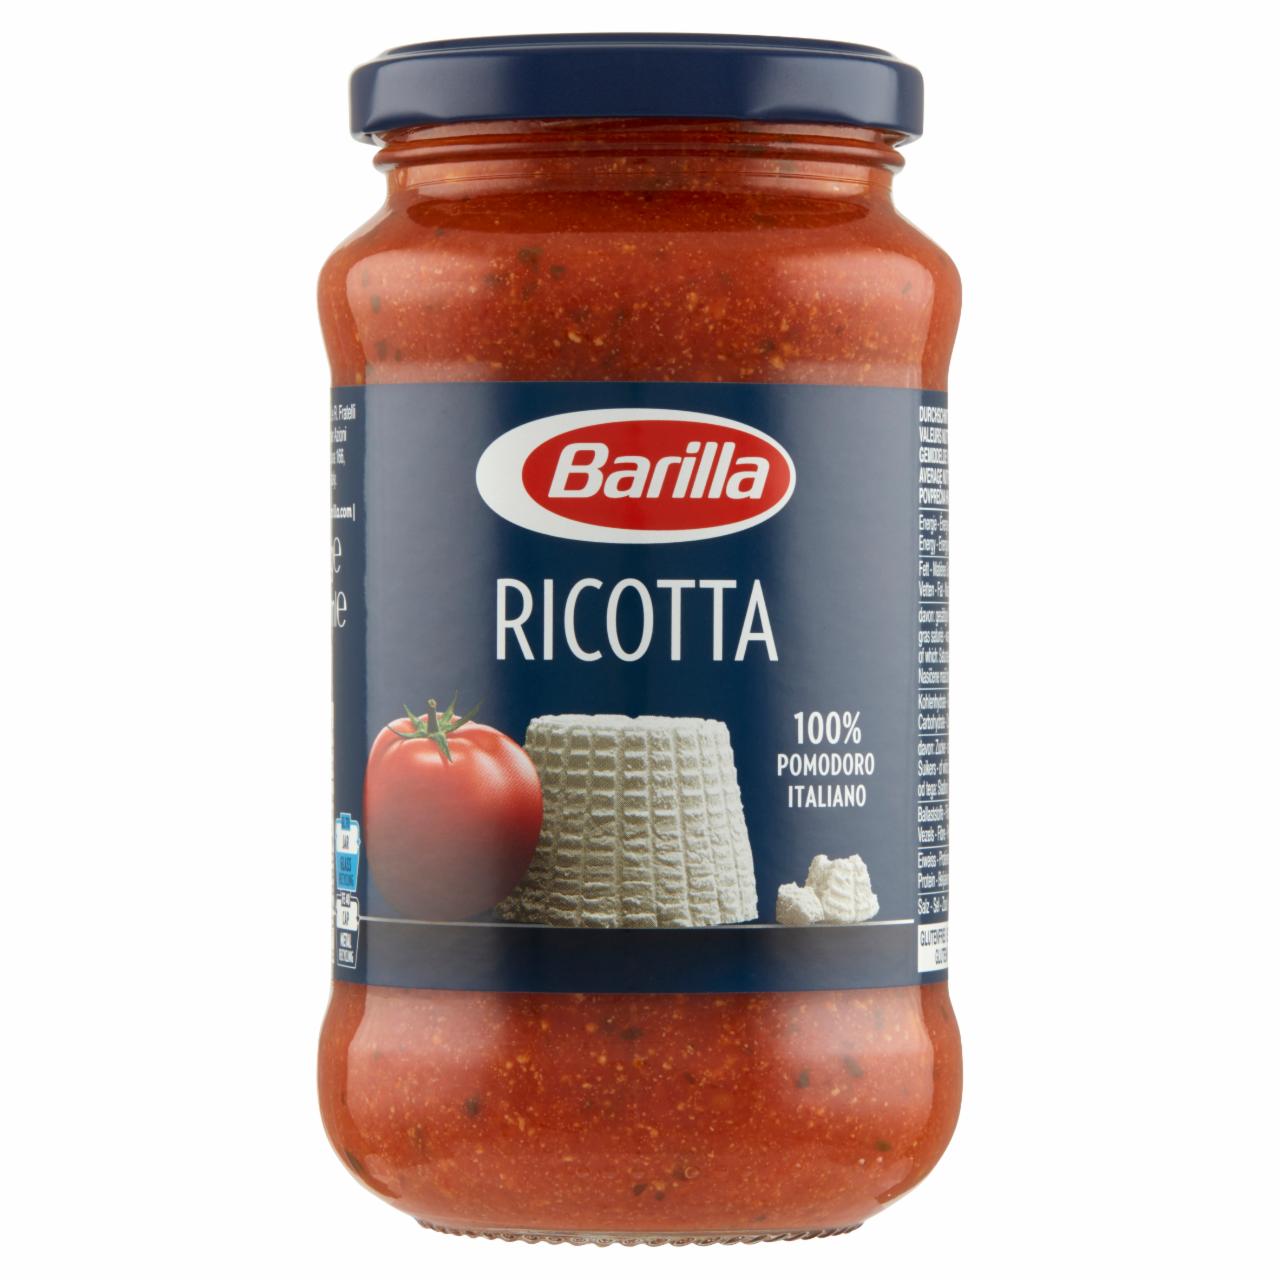 Zdjęcia - Ricotta 100% pomodoro italiano Barilla